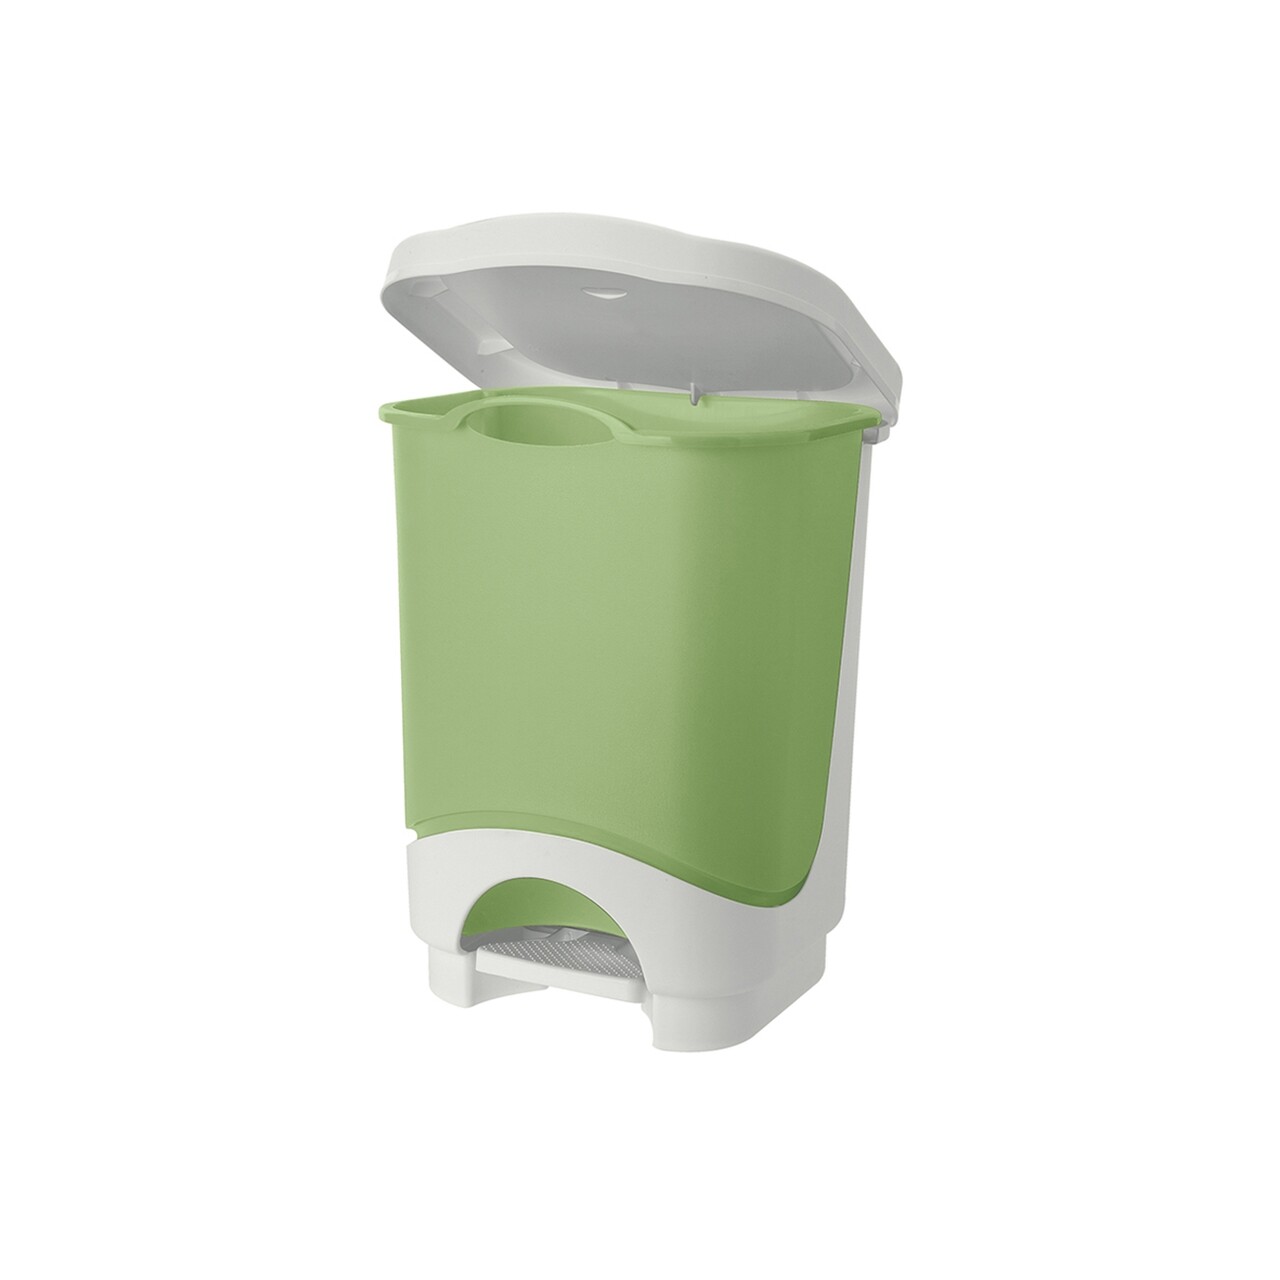 Cos De Gunoi Idea Cu Pedala, Plastic, 24 L, Alb/verde